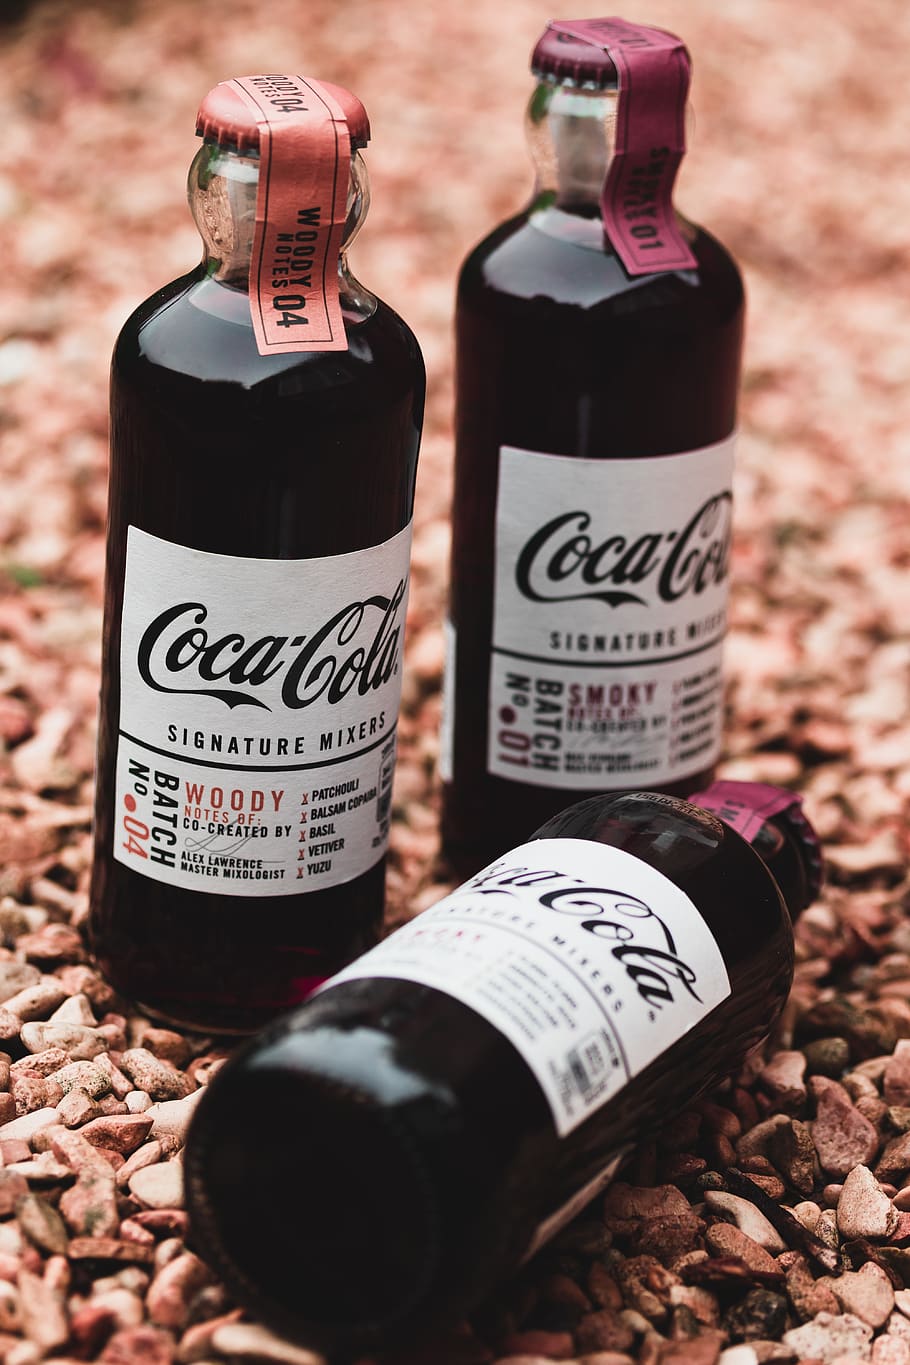 coca cola, bottle, the drink, drink, cola, soda, refreshment, glass, liquid, vintage